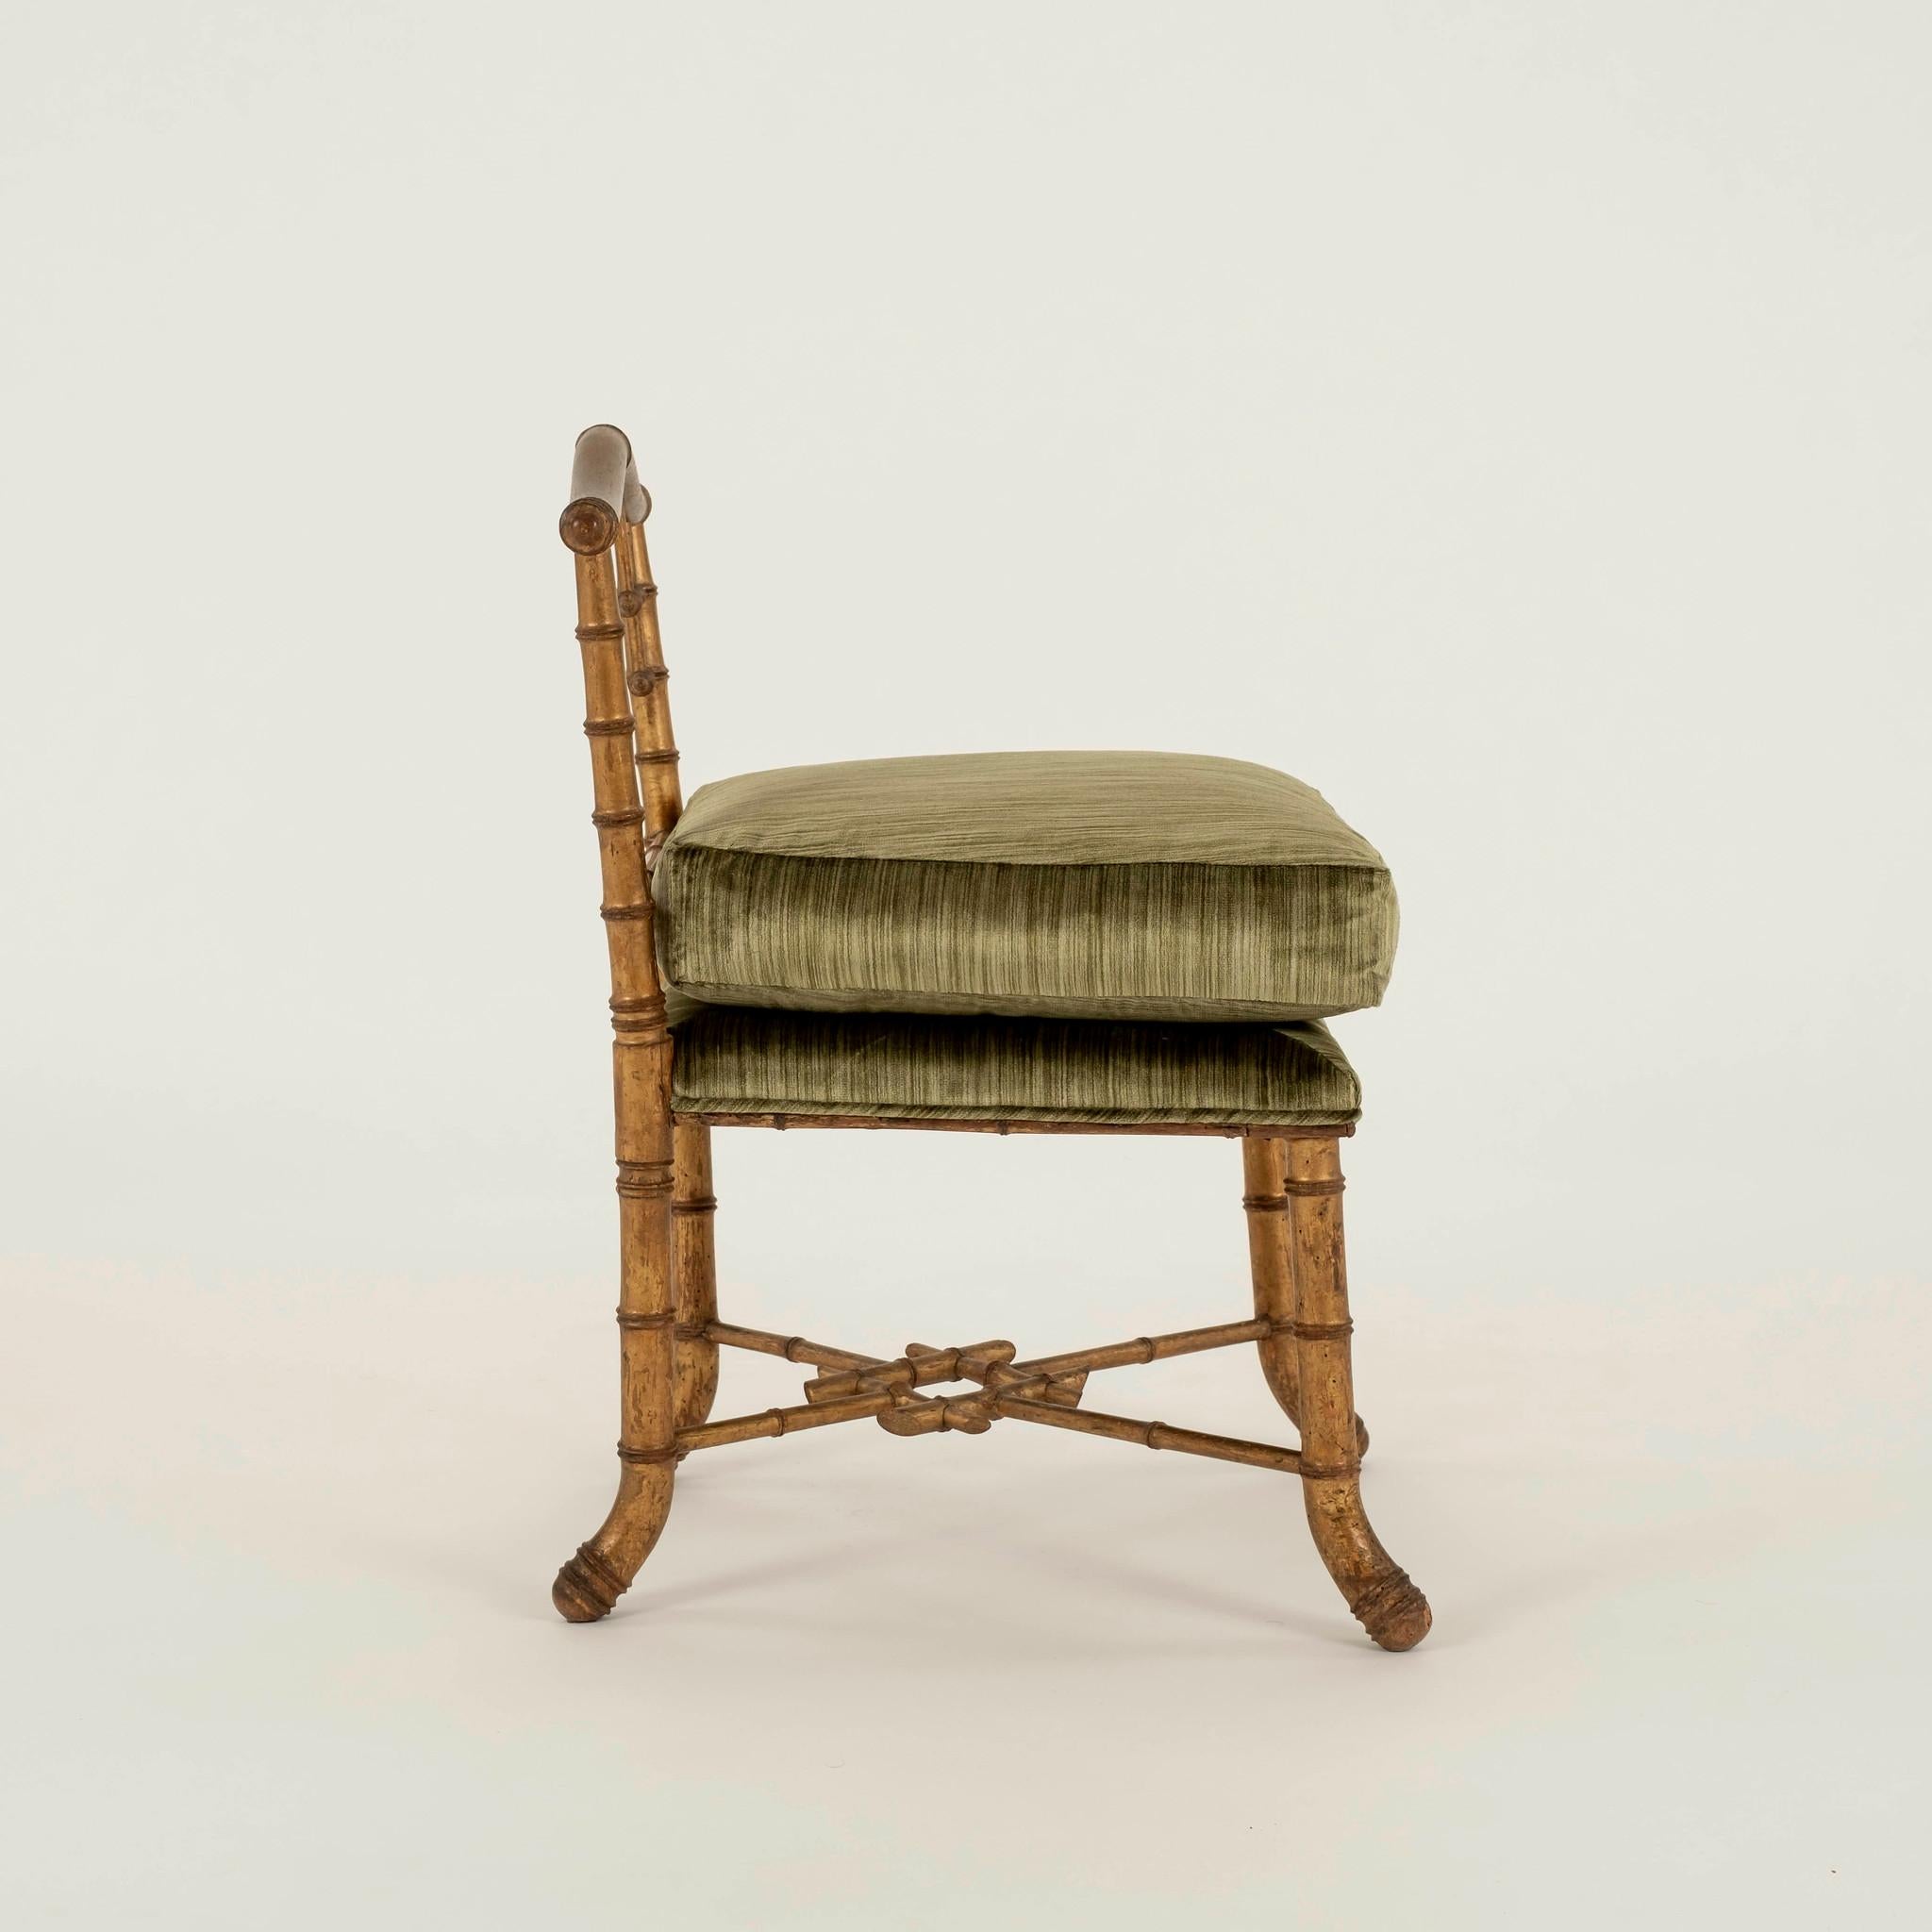 19th century giltwood bamboo chair newly upholsterd in a beryl green striated silk velvet.